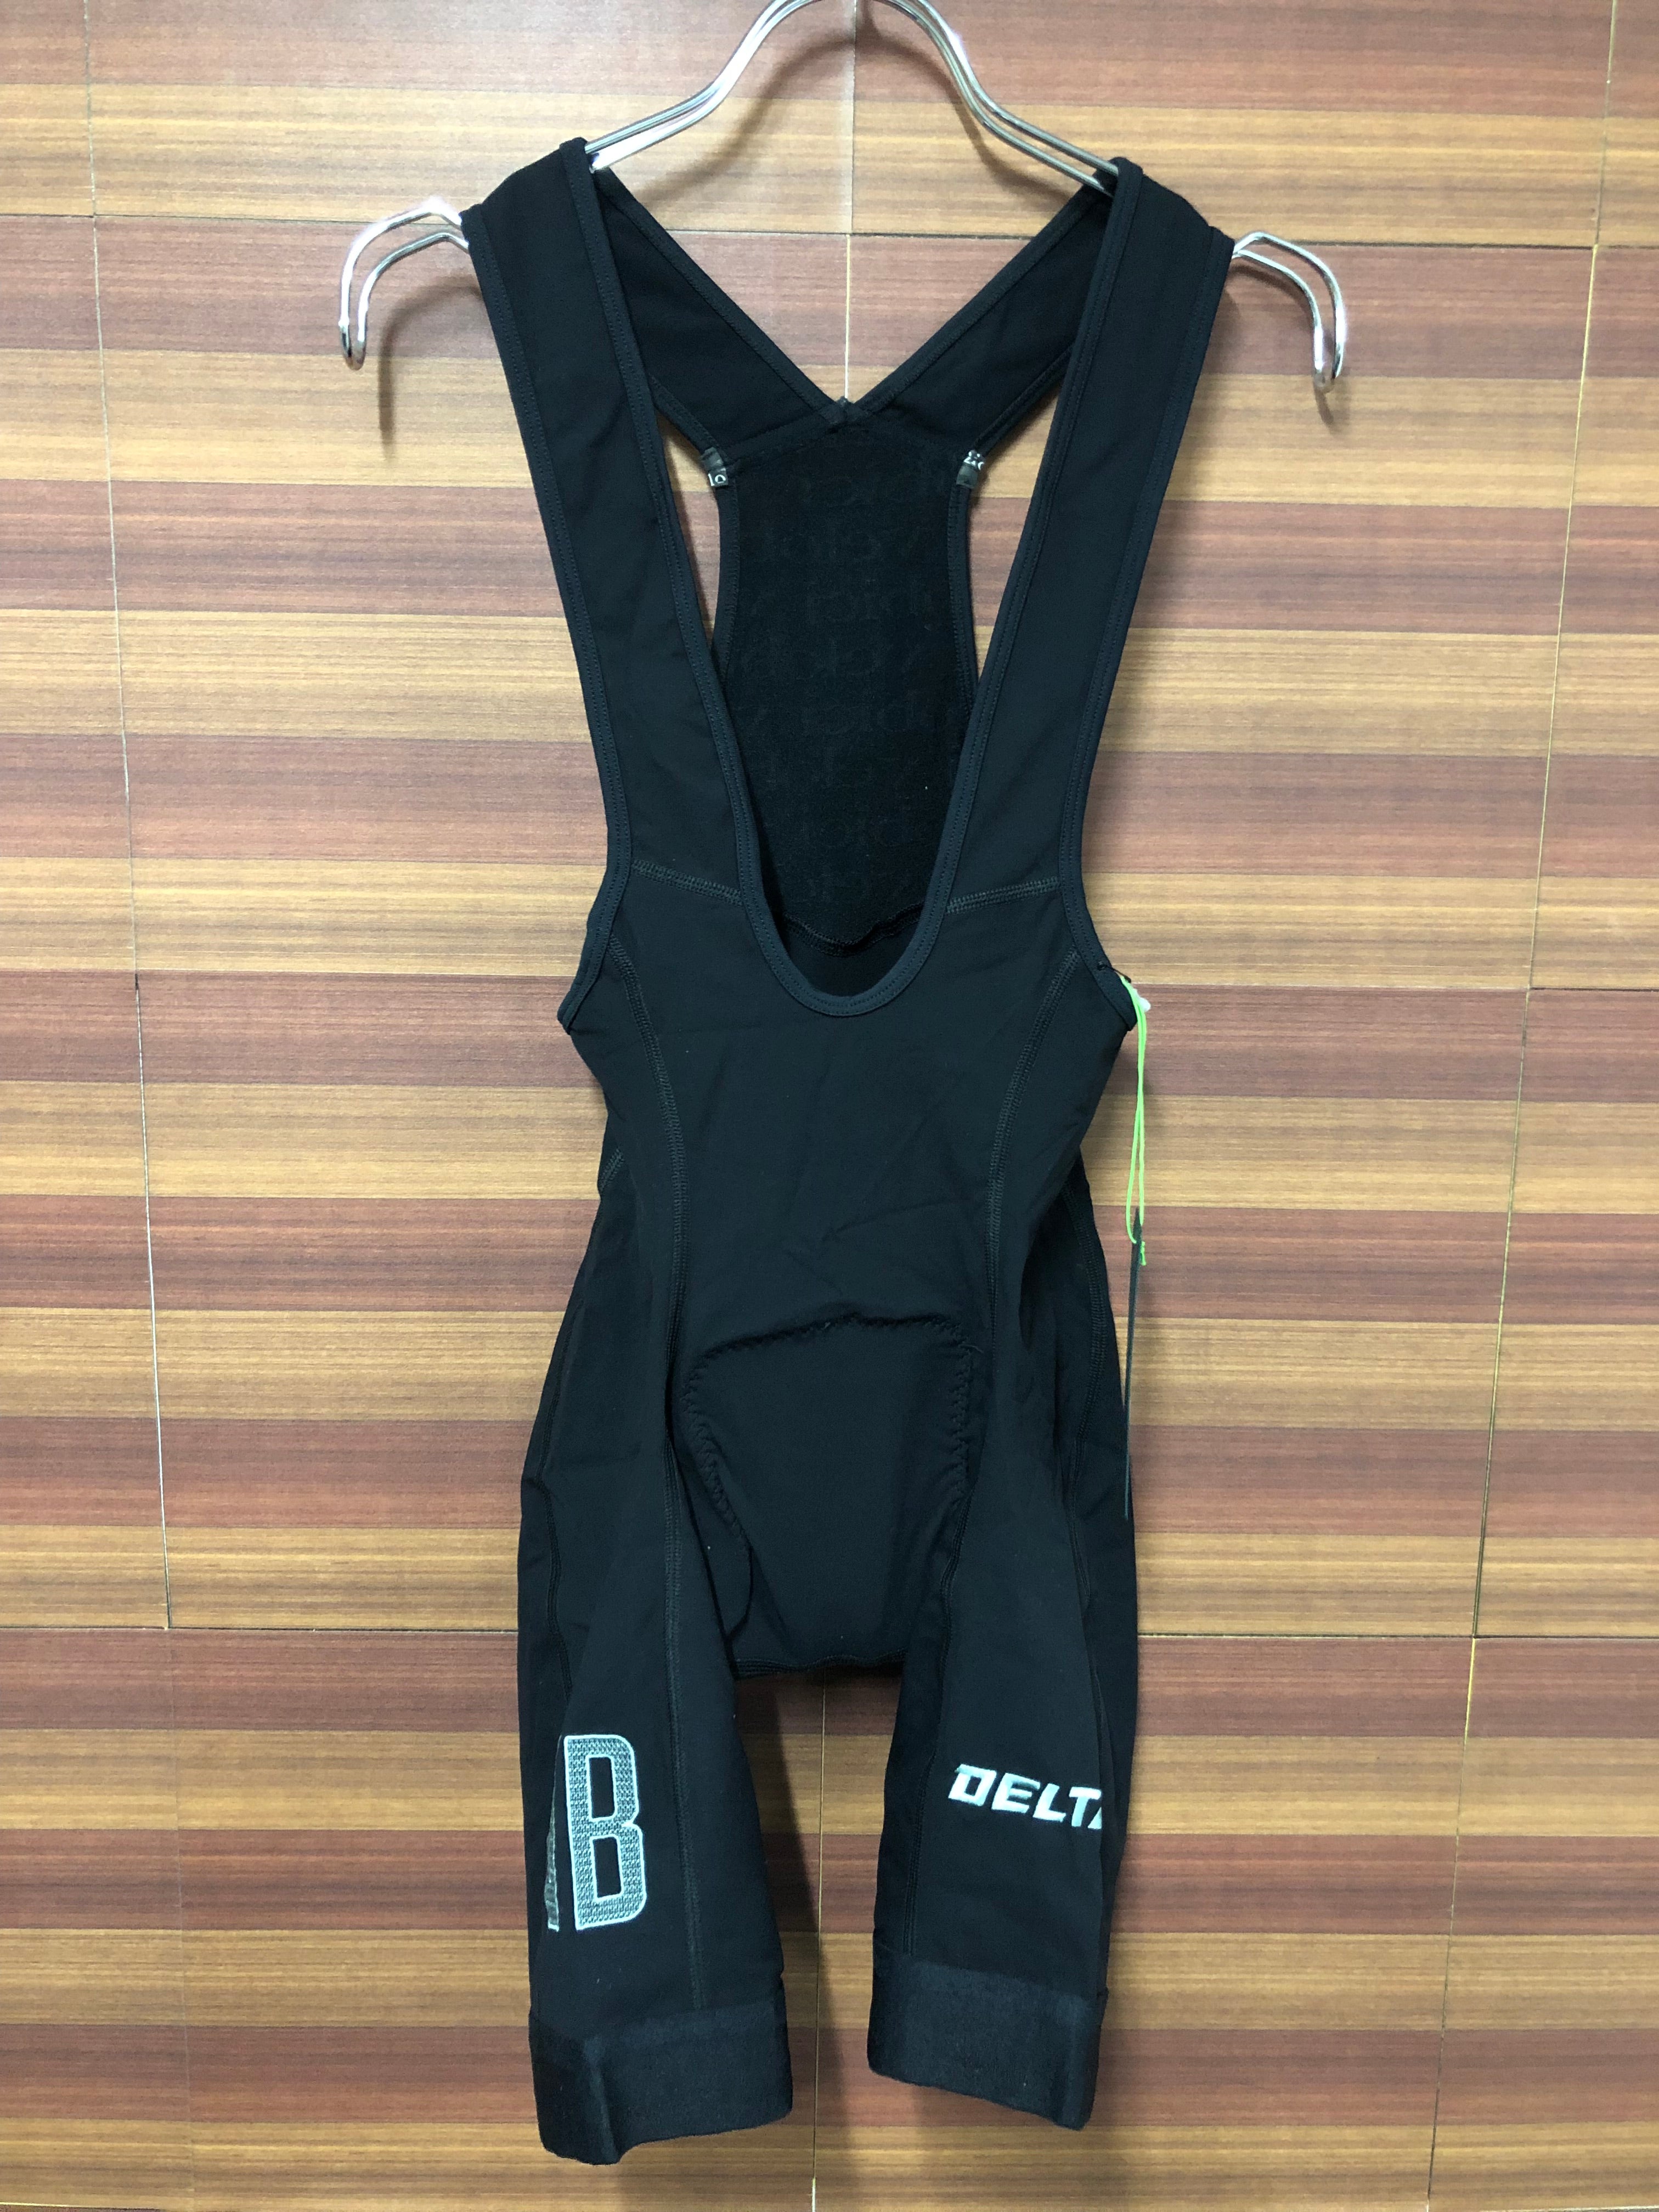 HM248 VELOBICI ヴェロビチ Delta Bib Shorts ビブショーツ Women Black/Seaform WXS